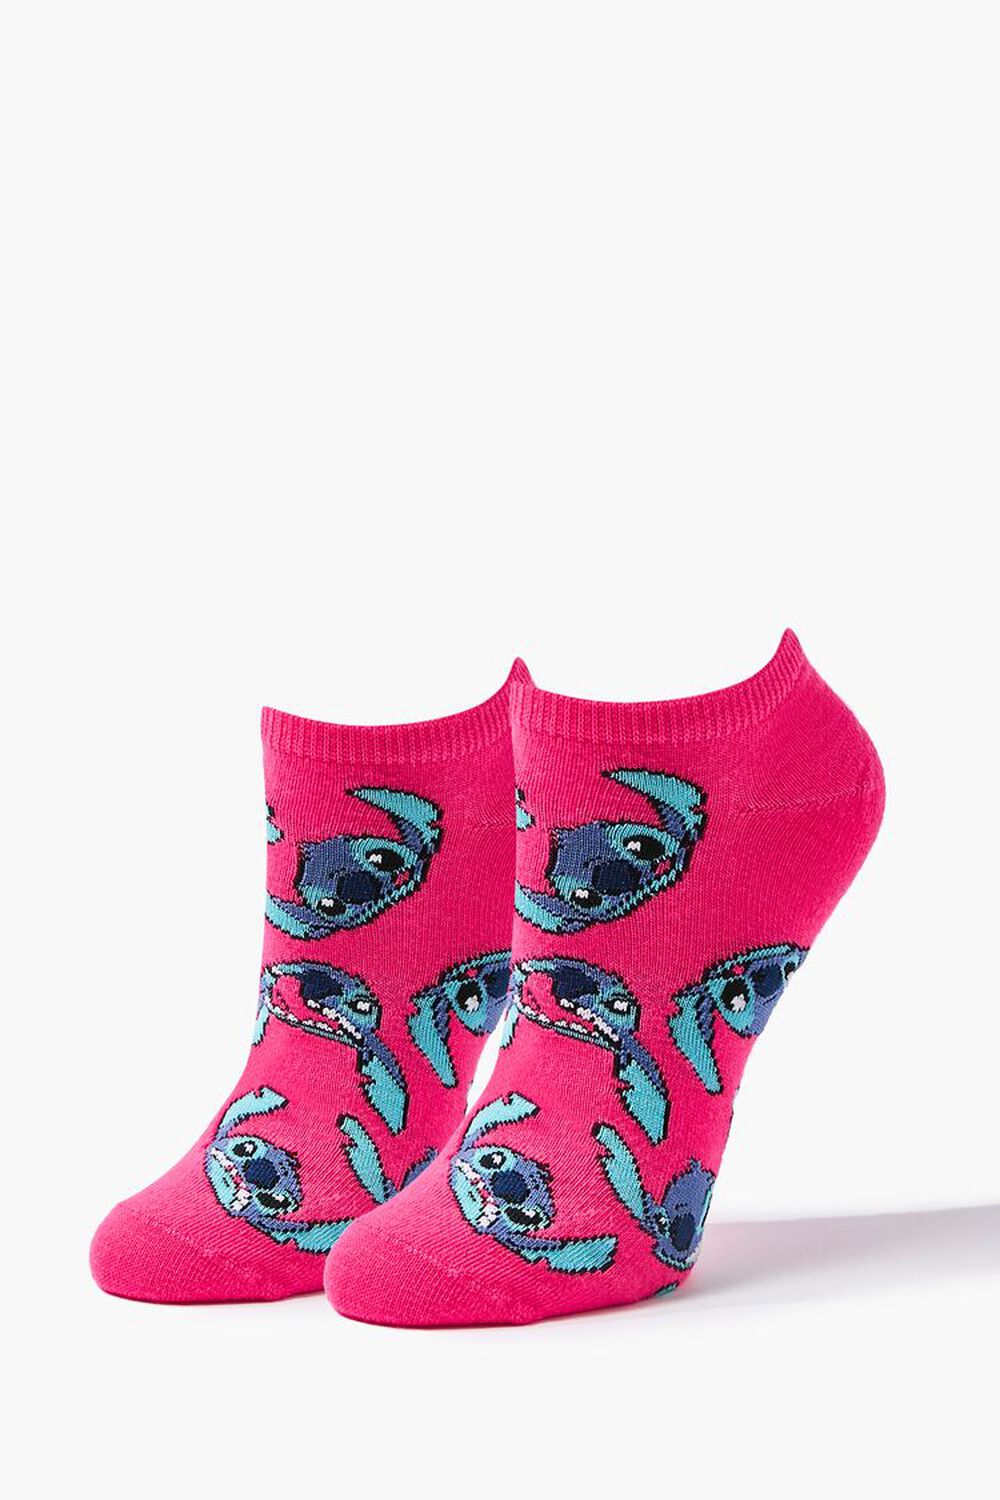 Stitch Print Ankle Socks, image 1